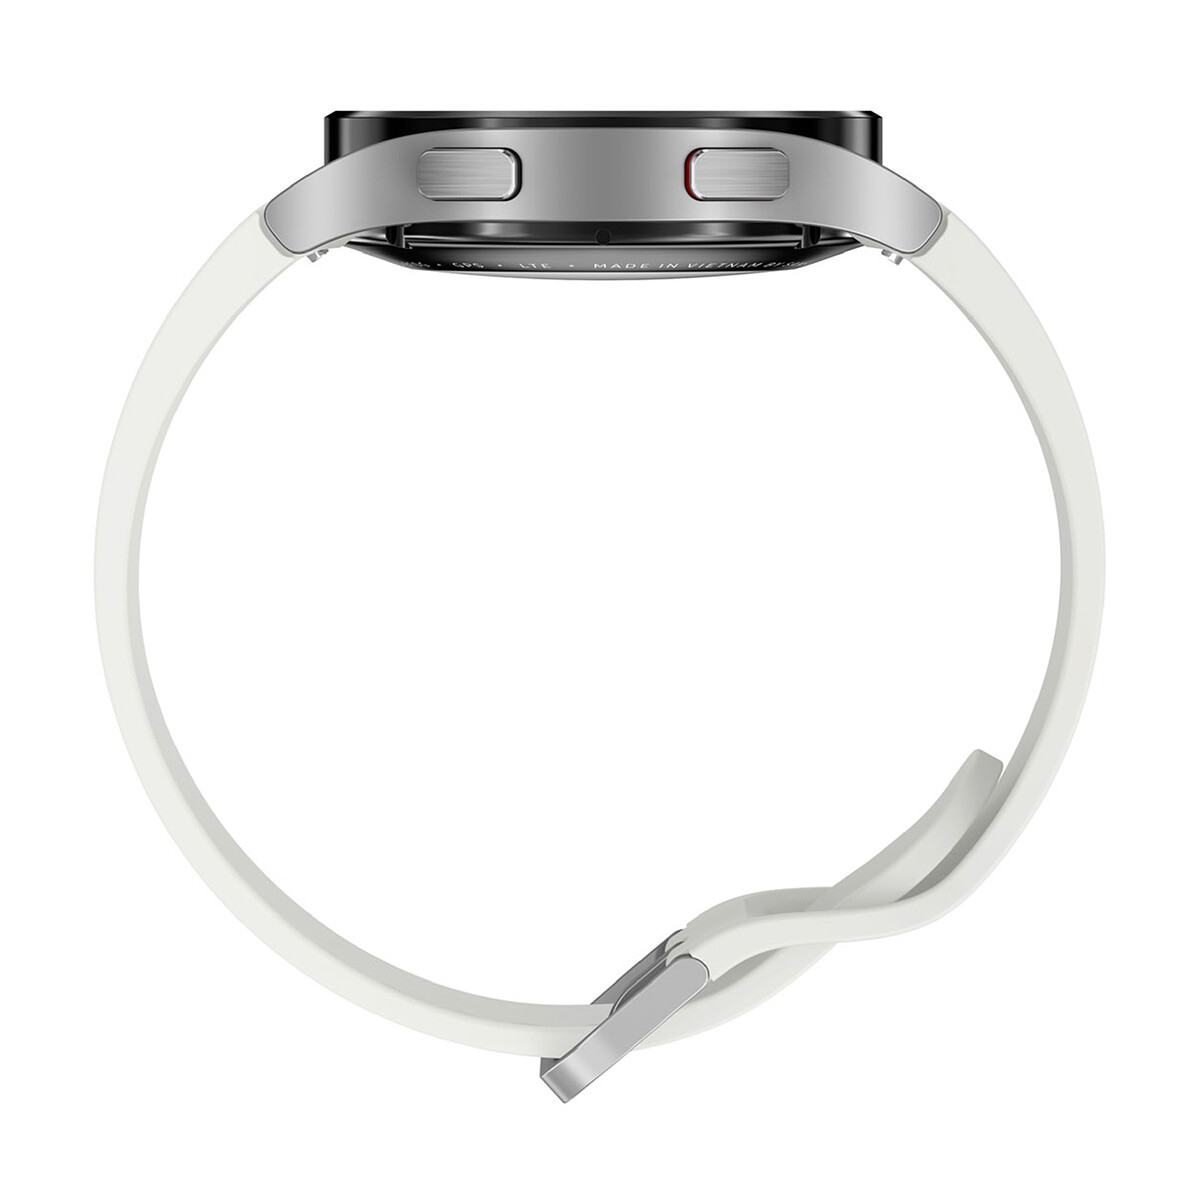 Samsung galaxy watch 4 40mm aluminum Silver